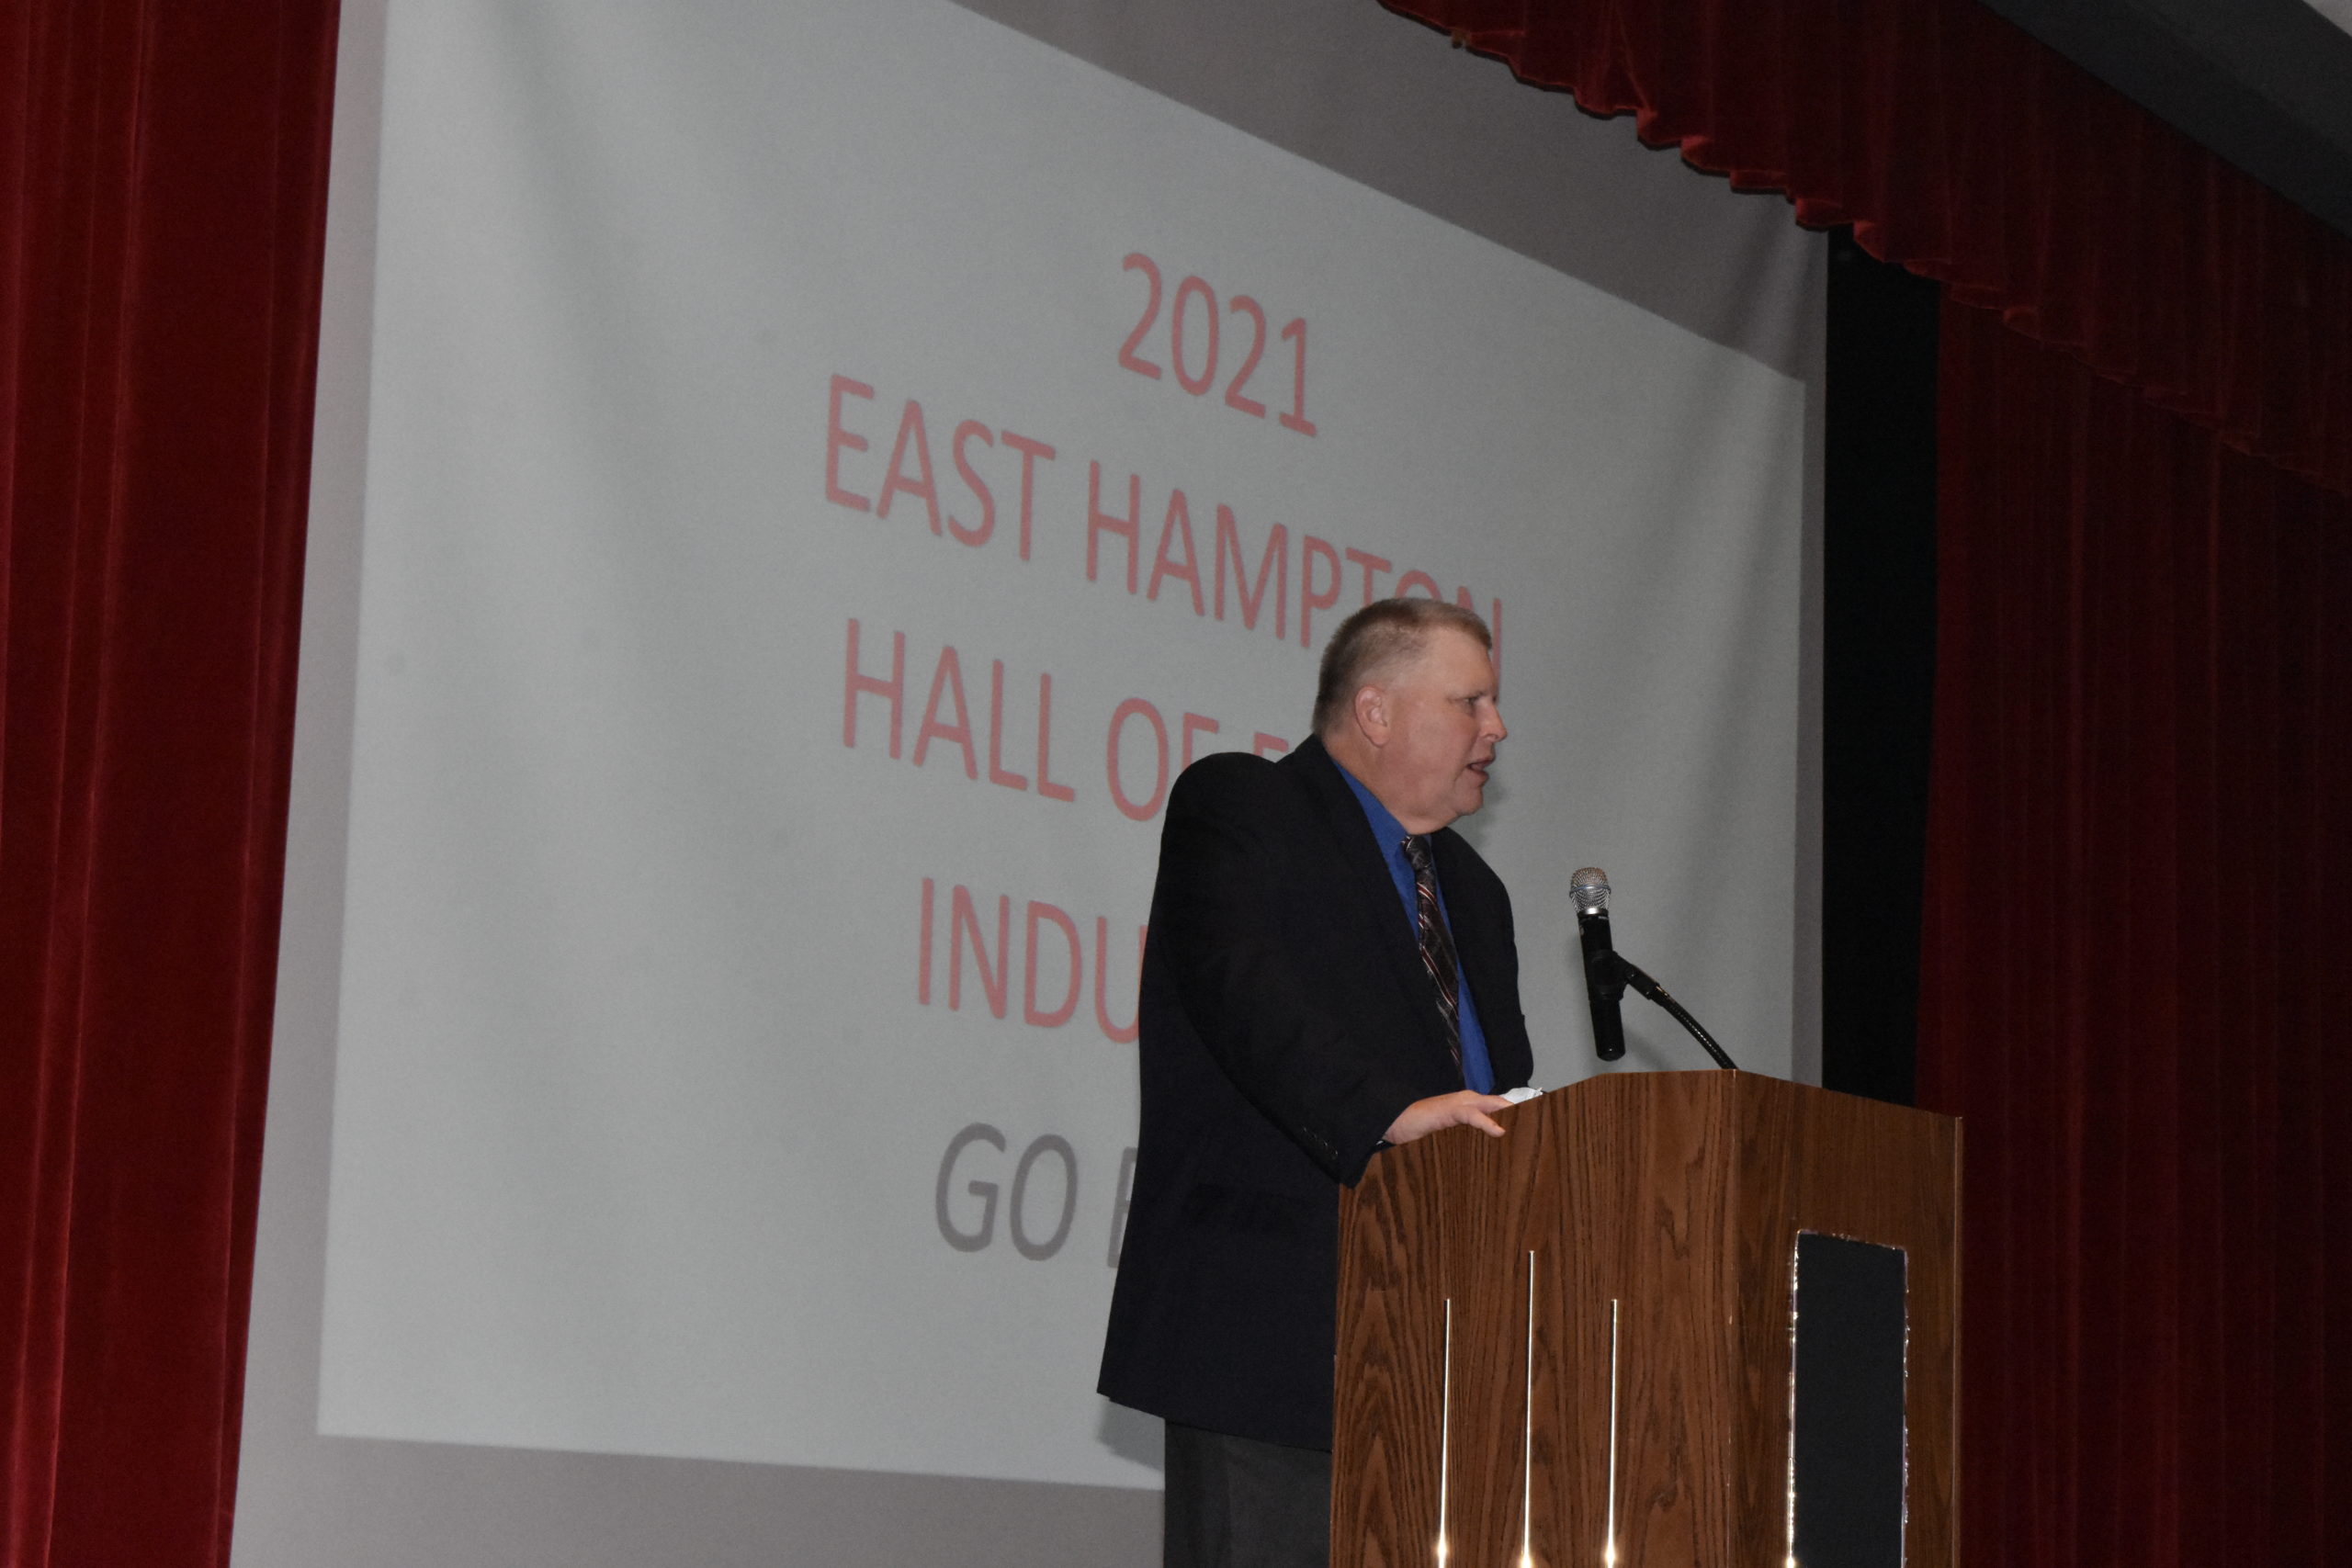 Richard Schneider, East Hampton Athletic Hall Of Fame president.